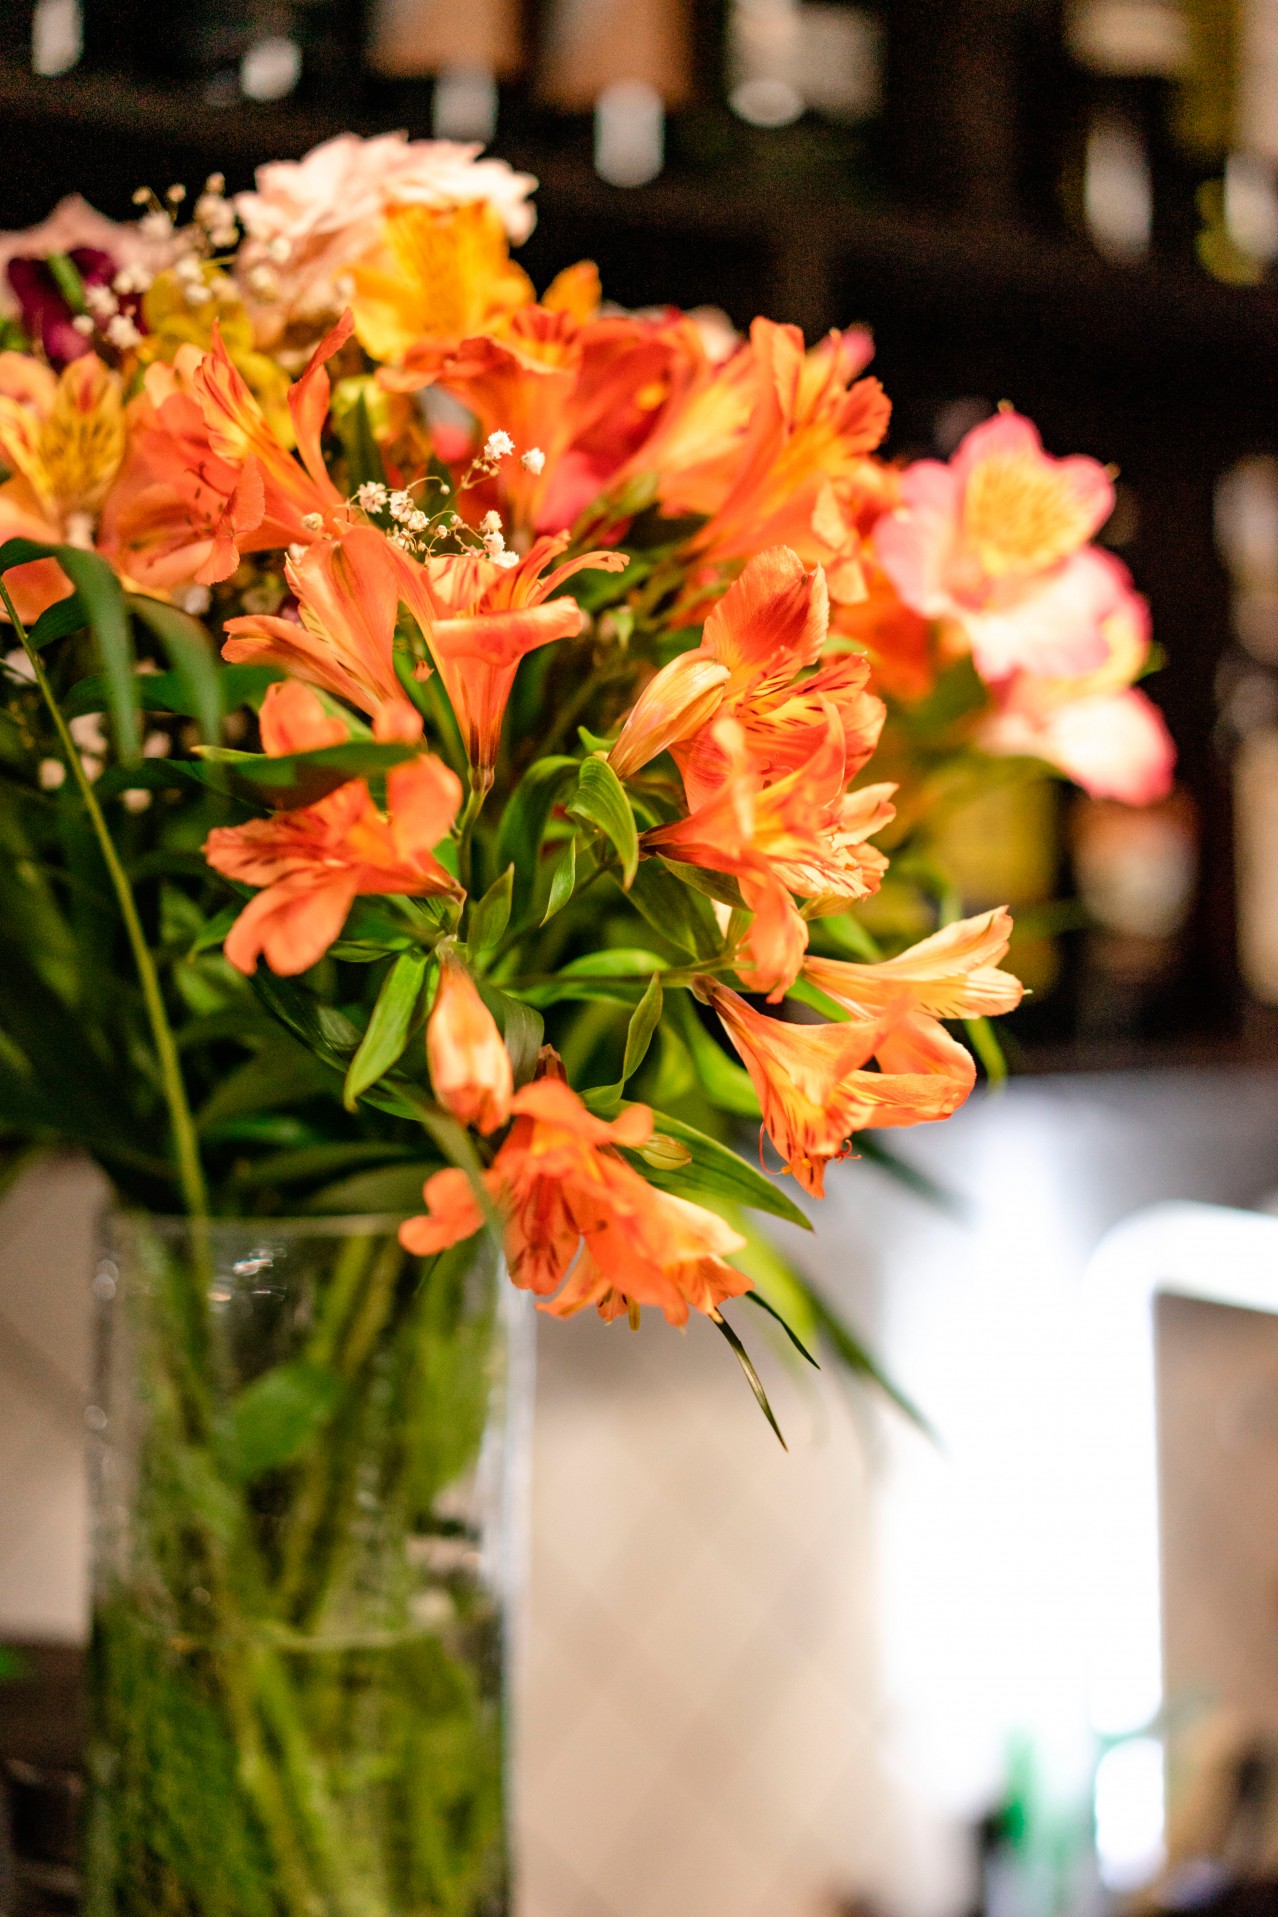 Orange lilies in the vase